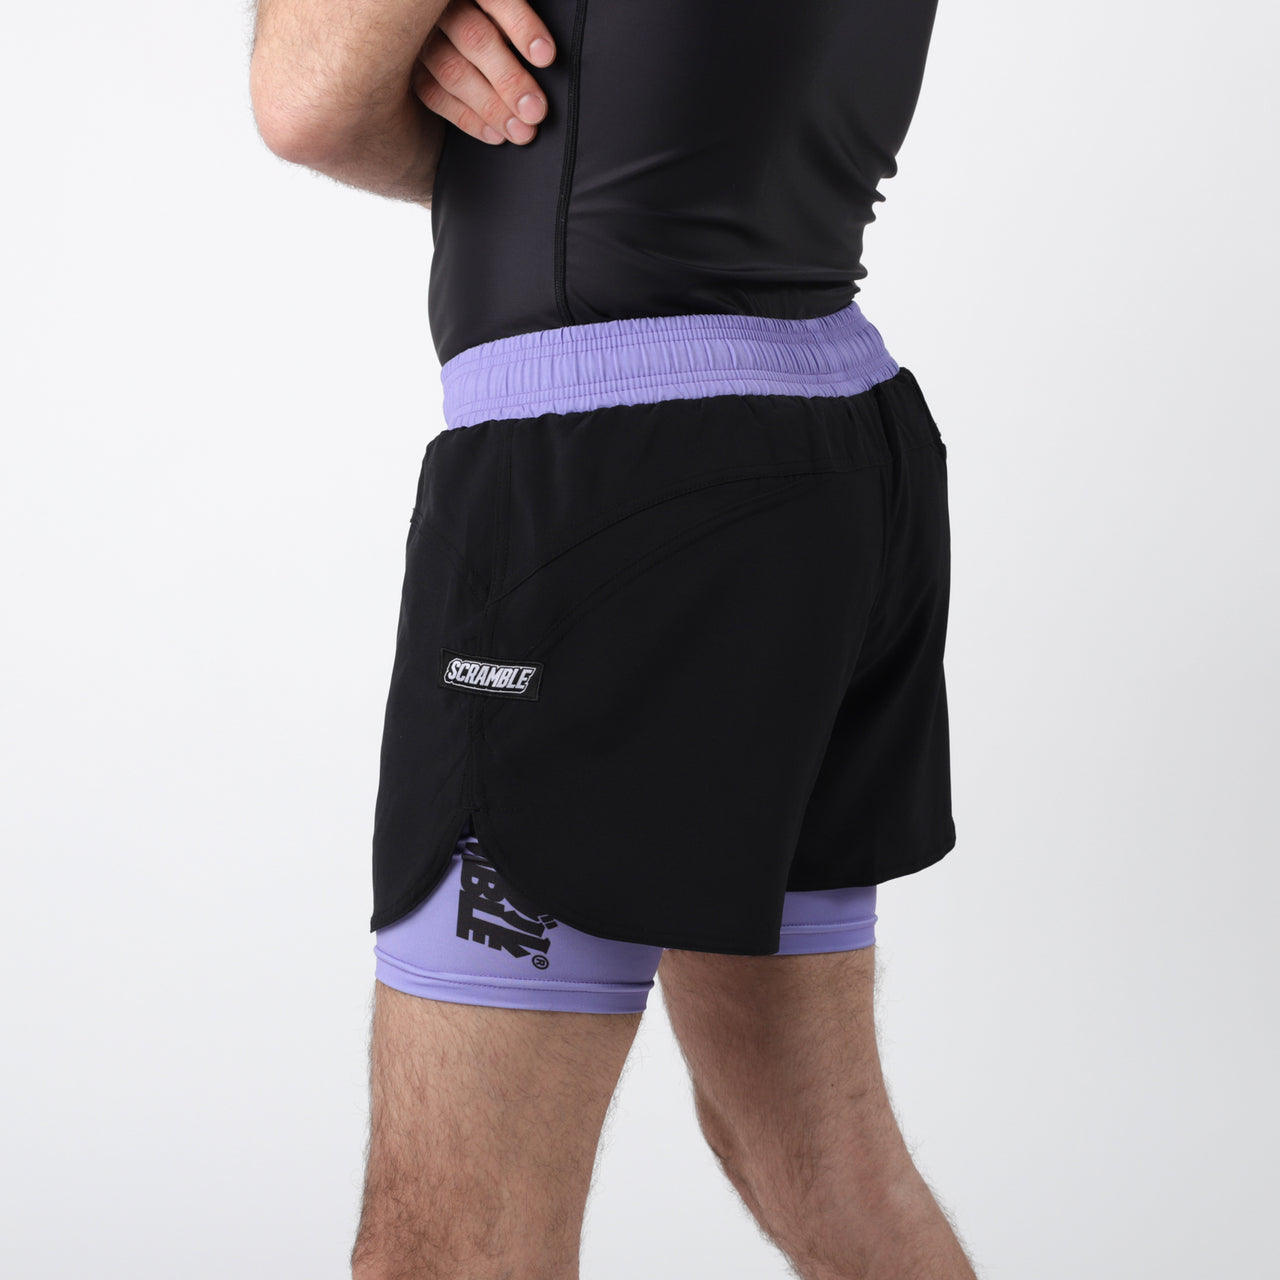 Scramble Combination Shorts - Black/Purple